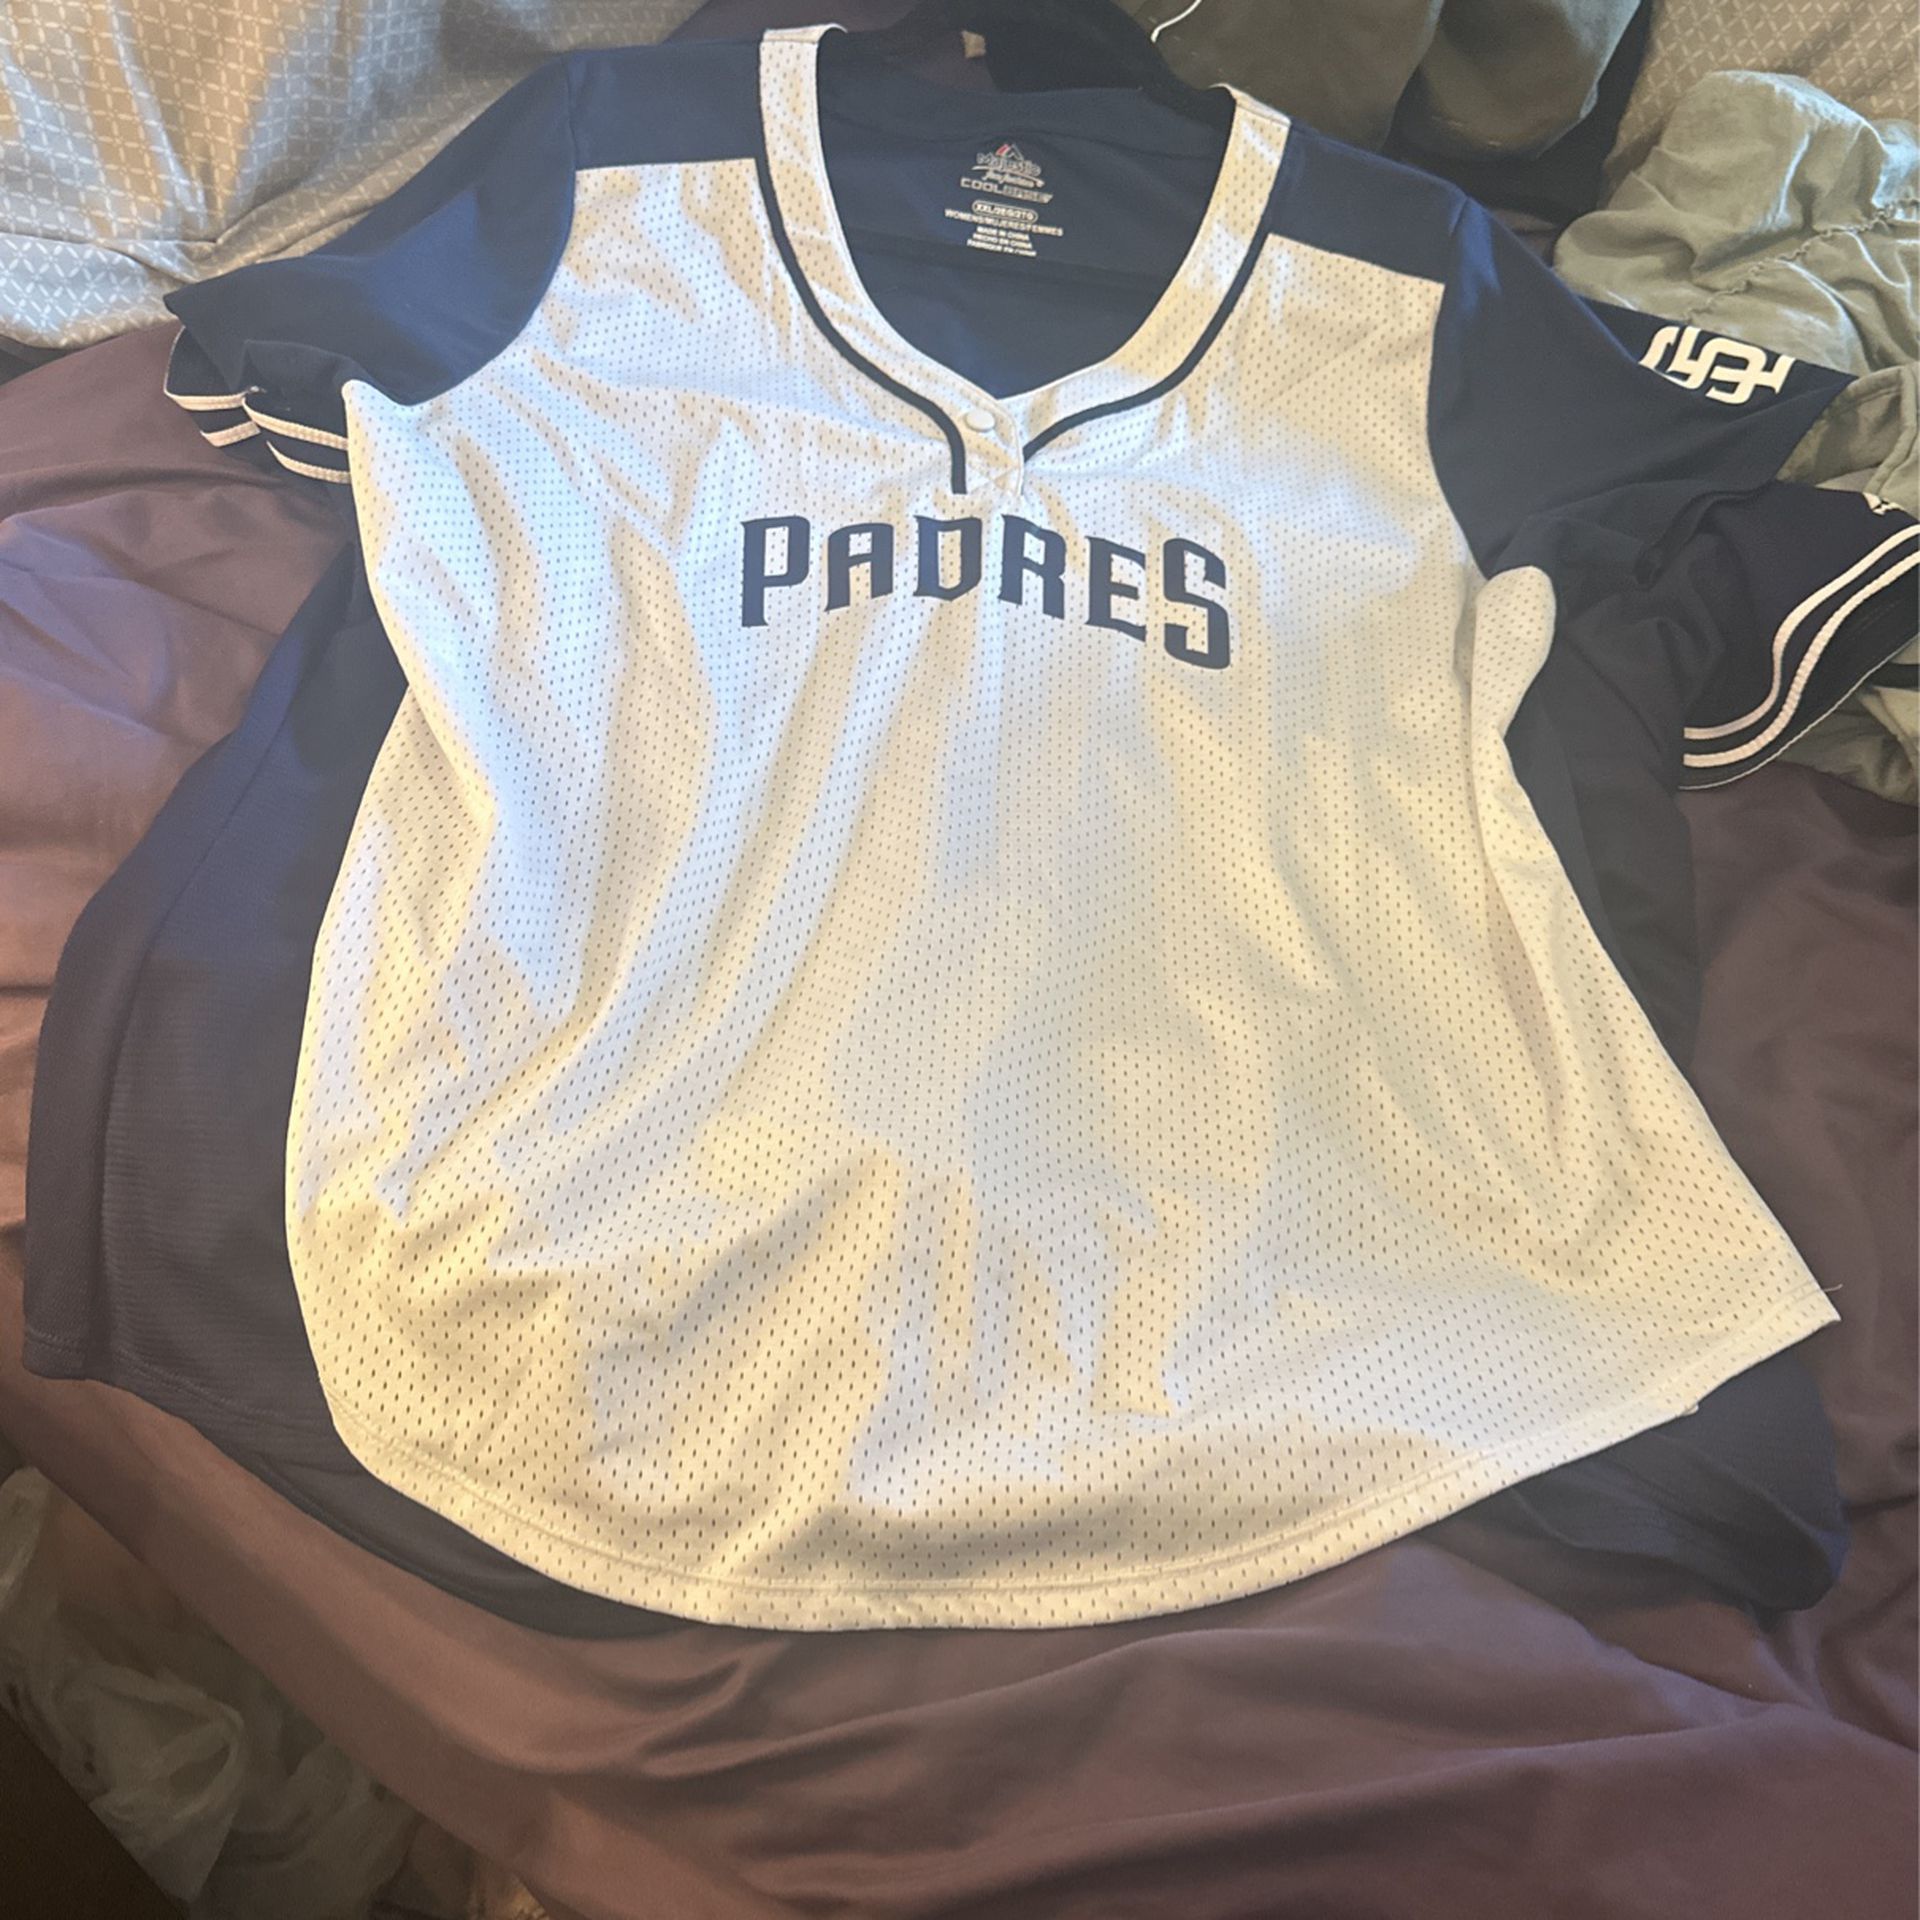 Padres Women’s Jersey Shirt